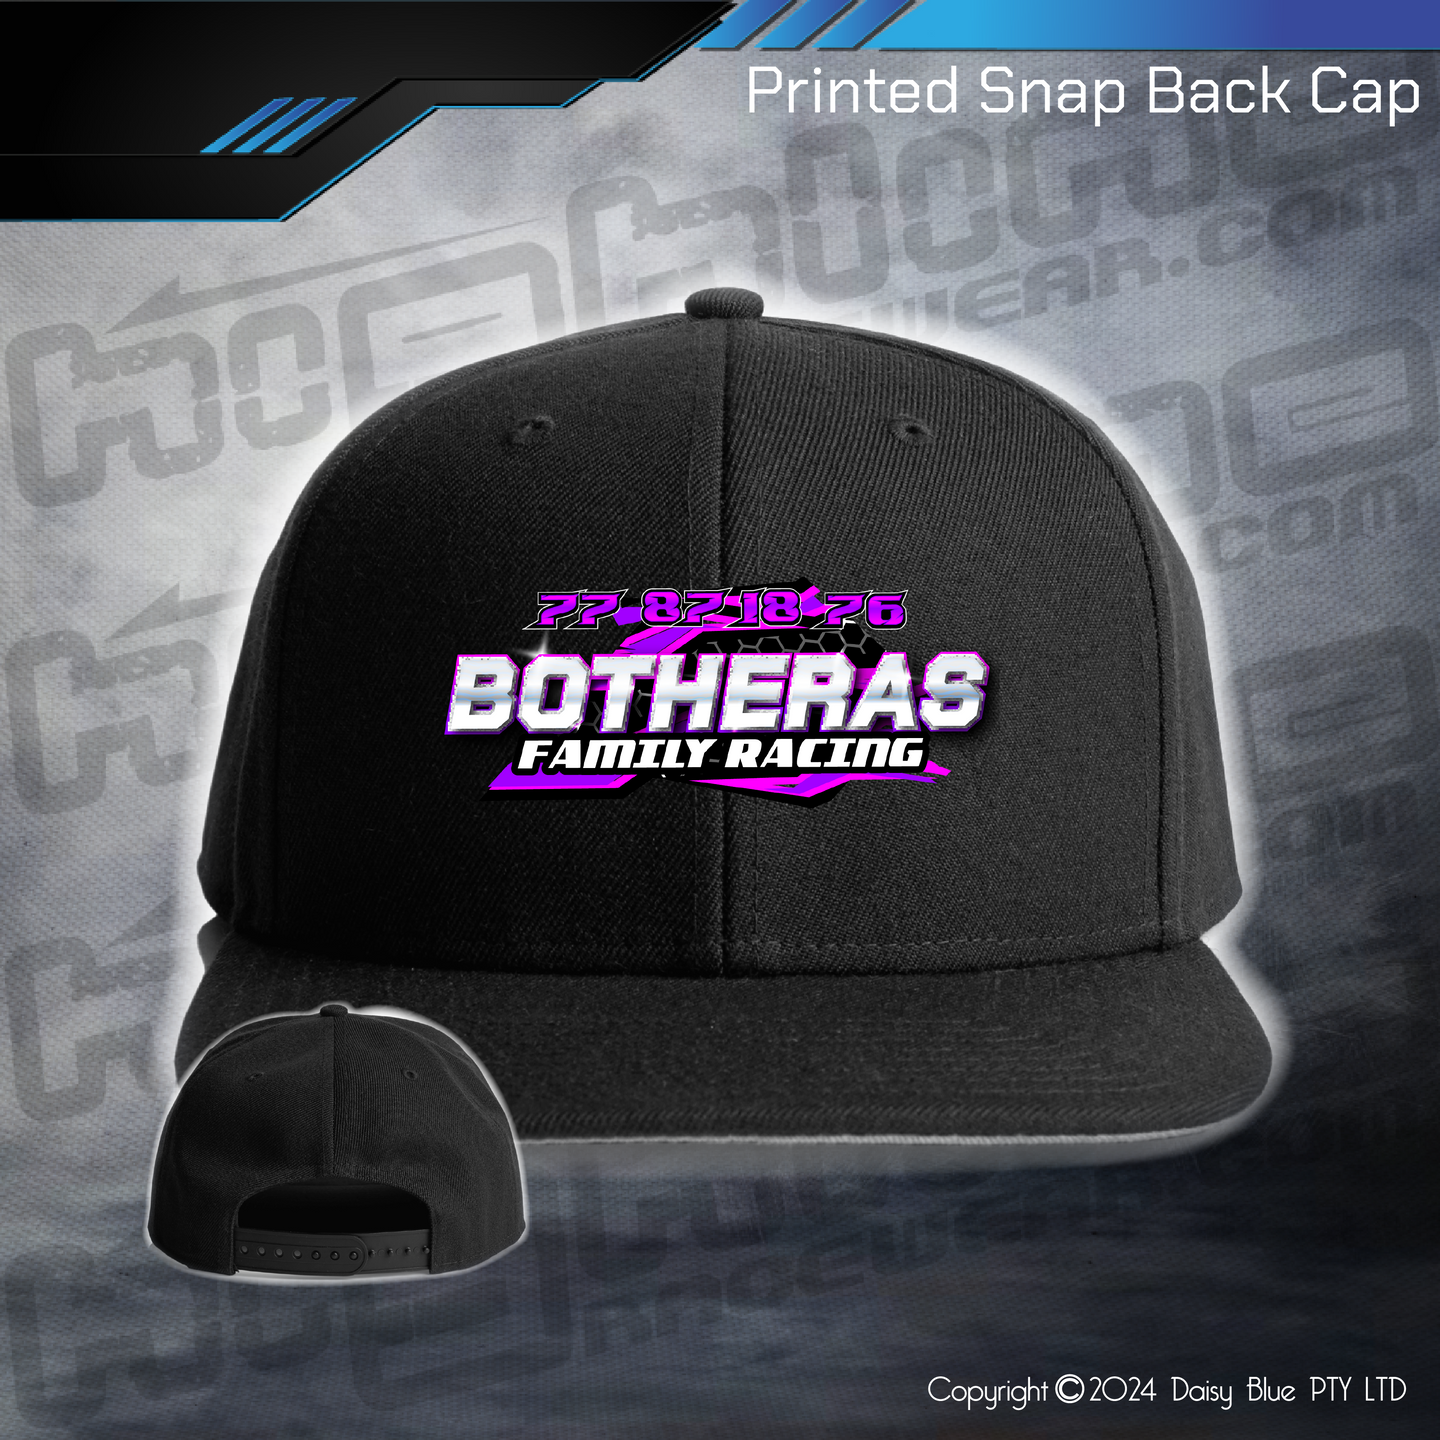 Printed Snap Back CAP - Botheras Family Racing